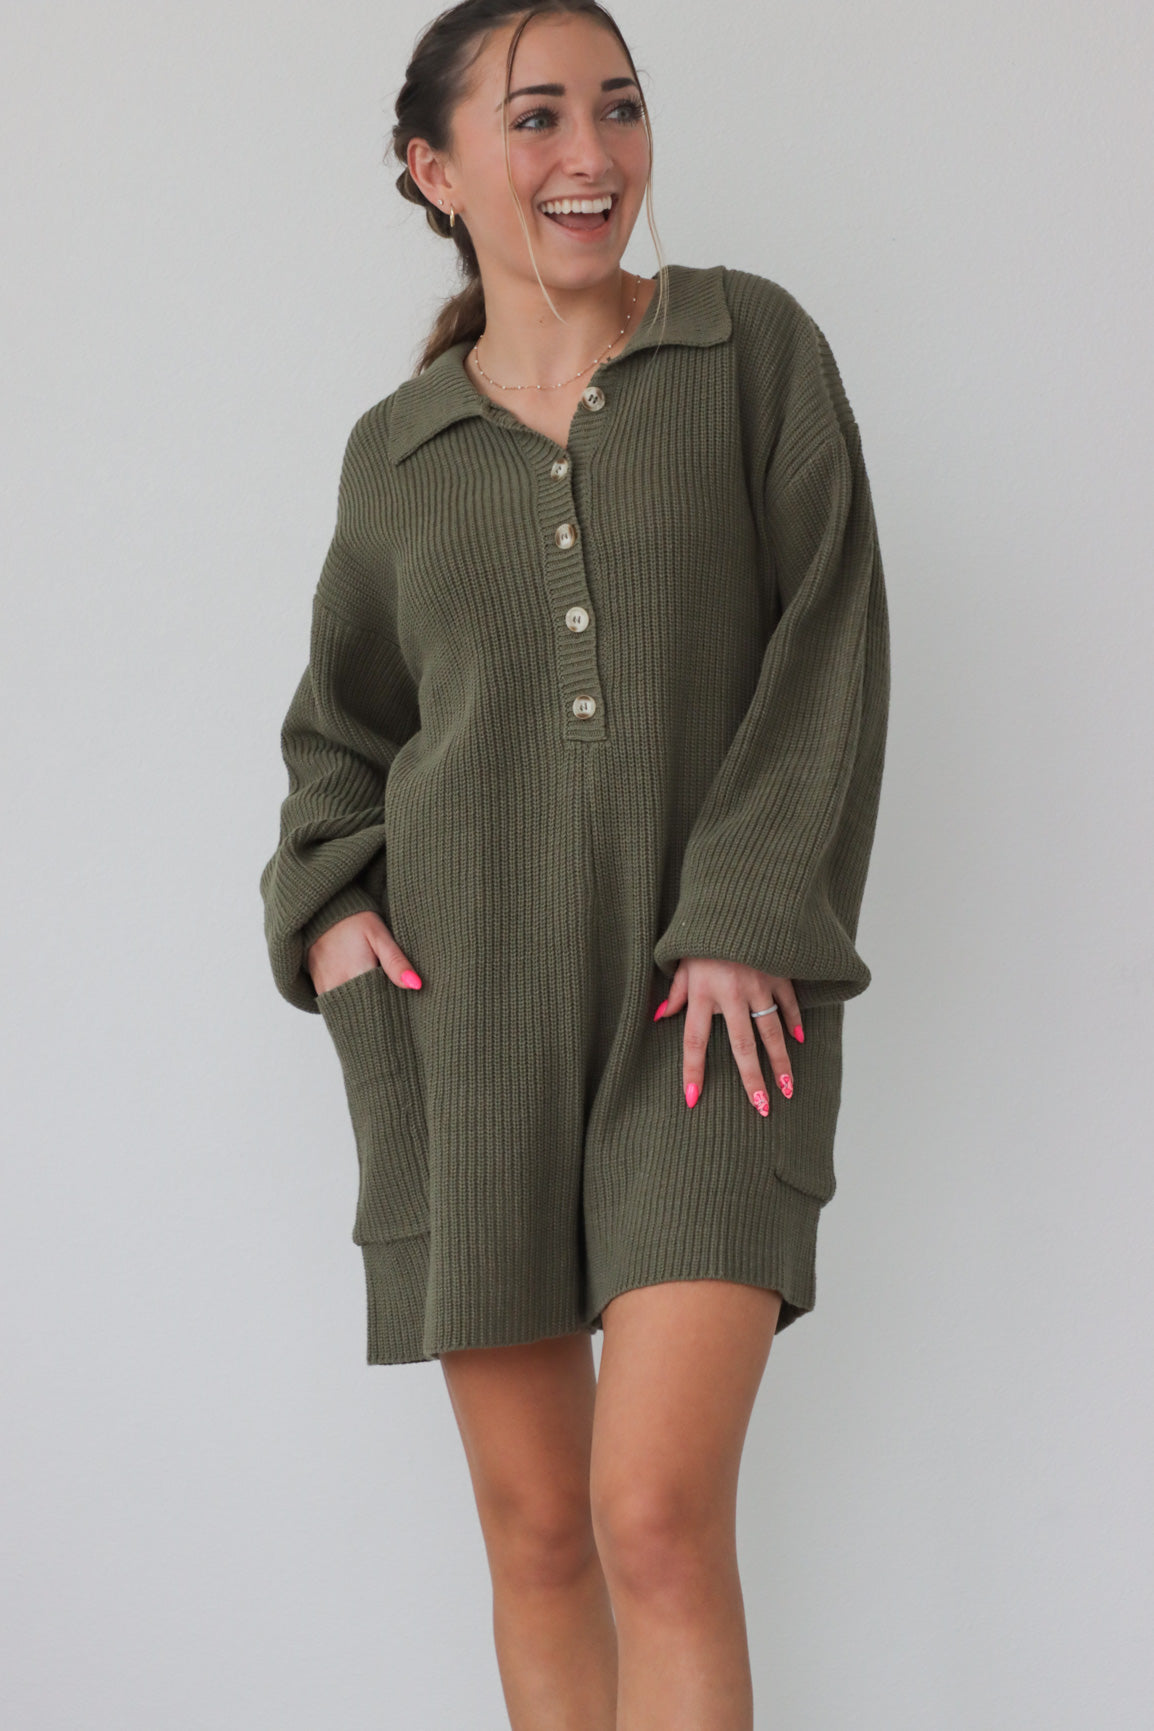 girl wearing olive green knit, long sleeved romper